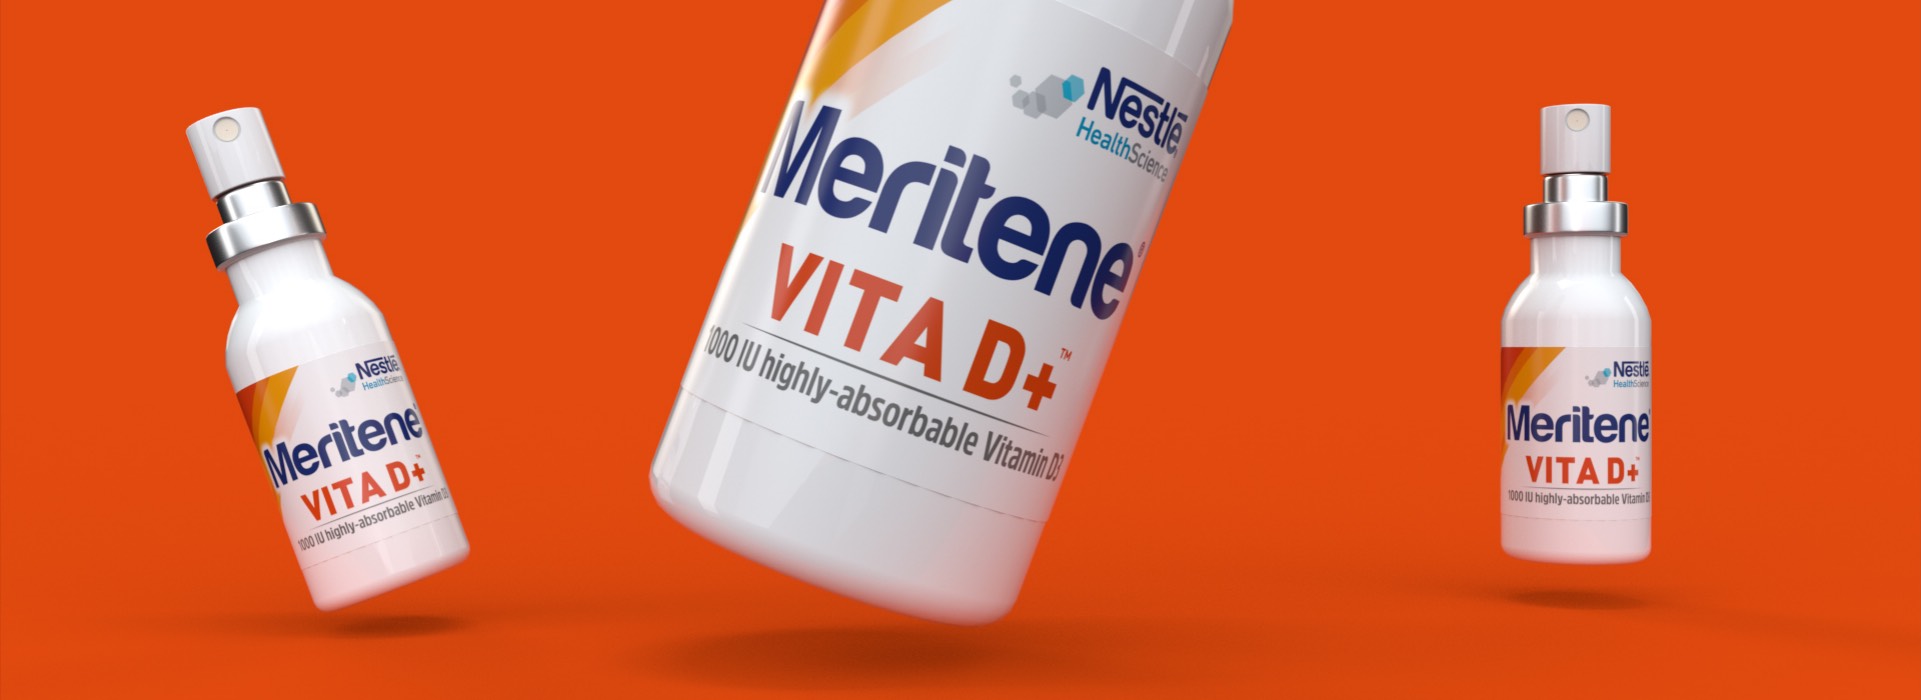 Vita D+  packaging design new spary format